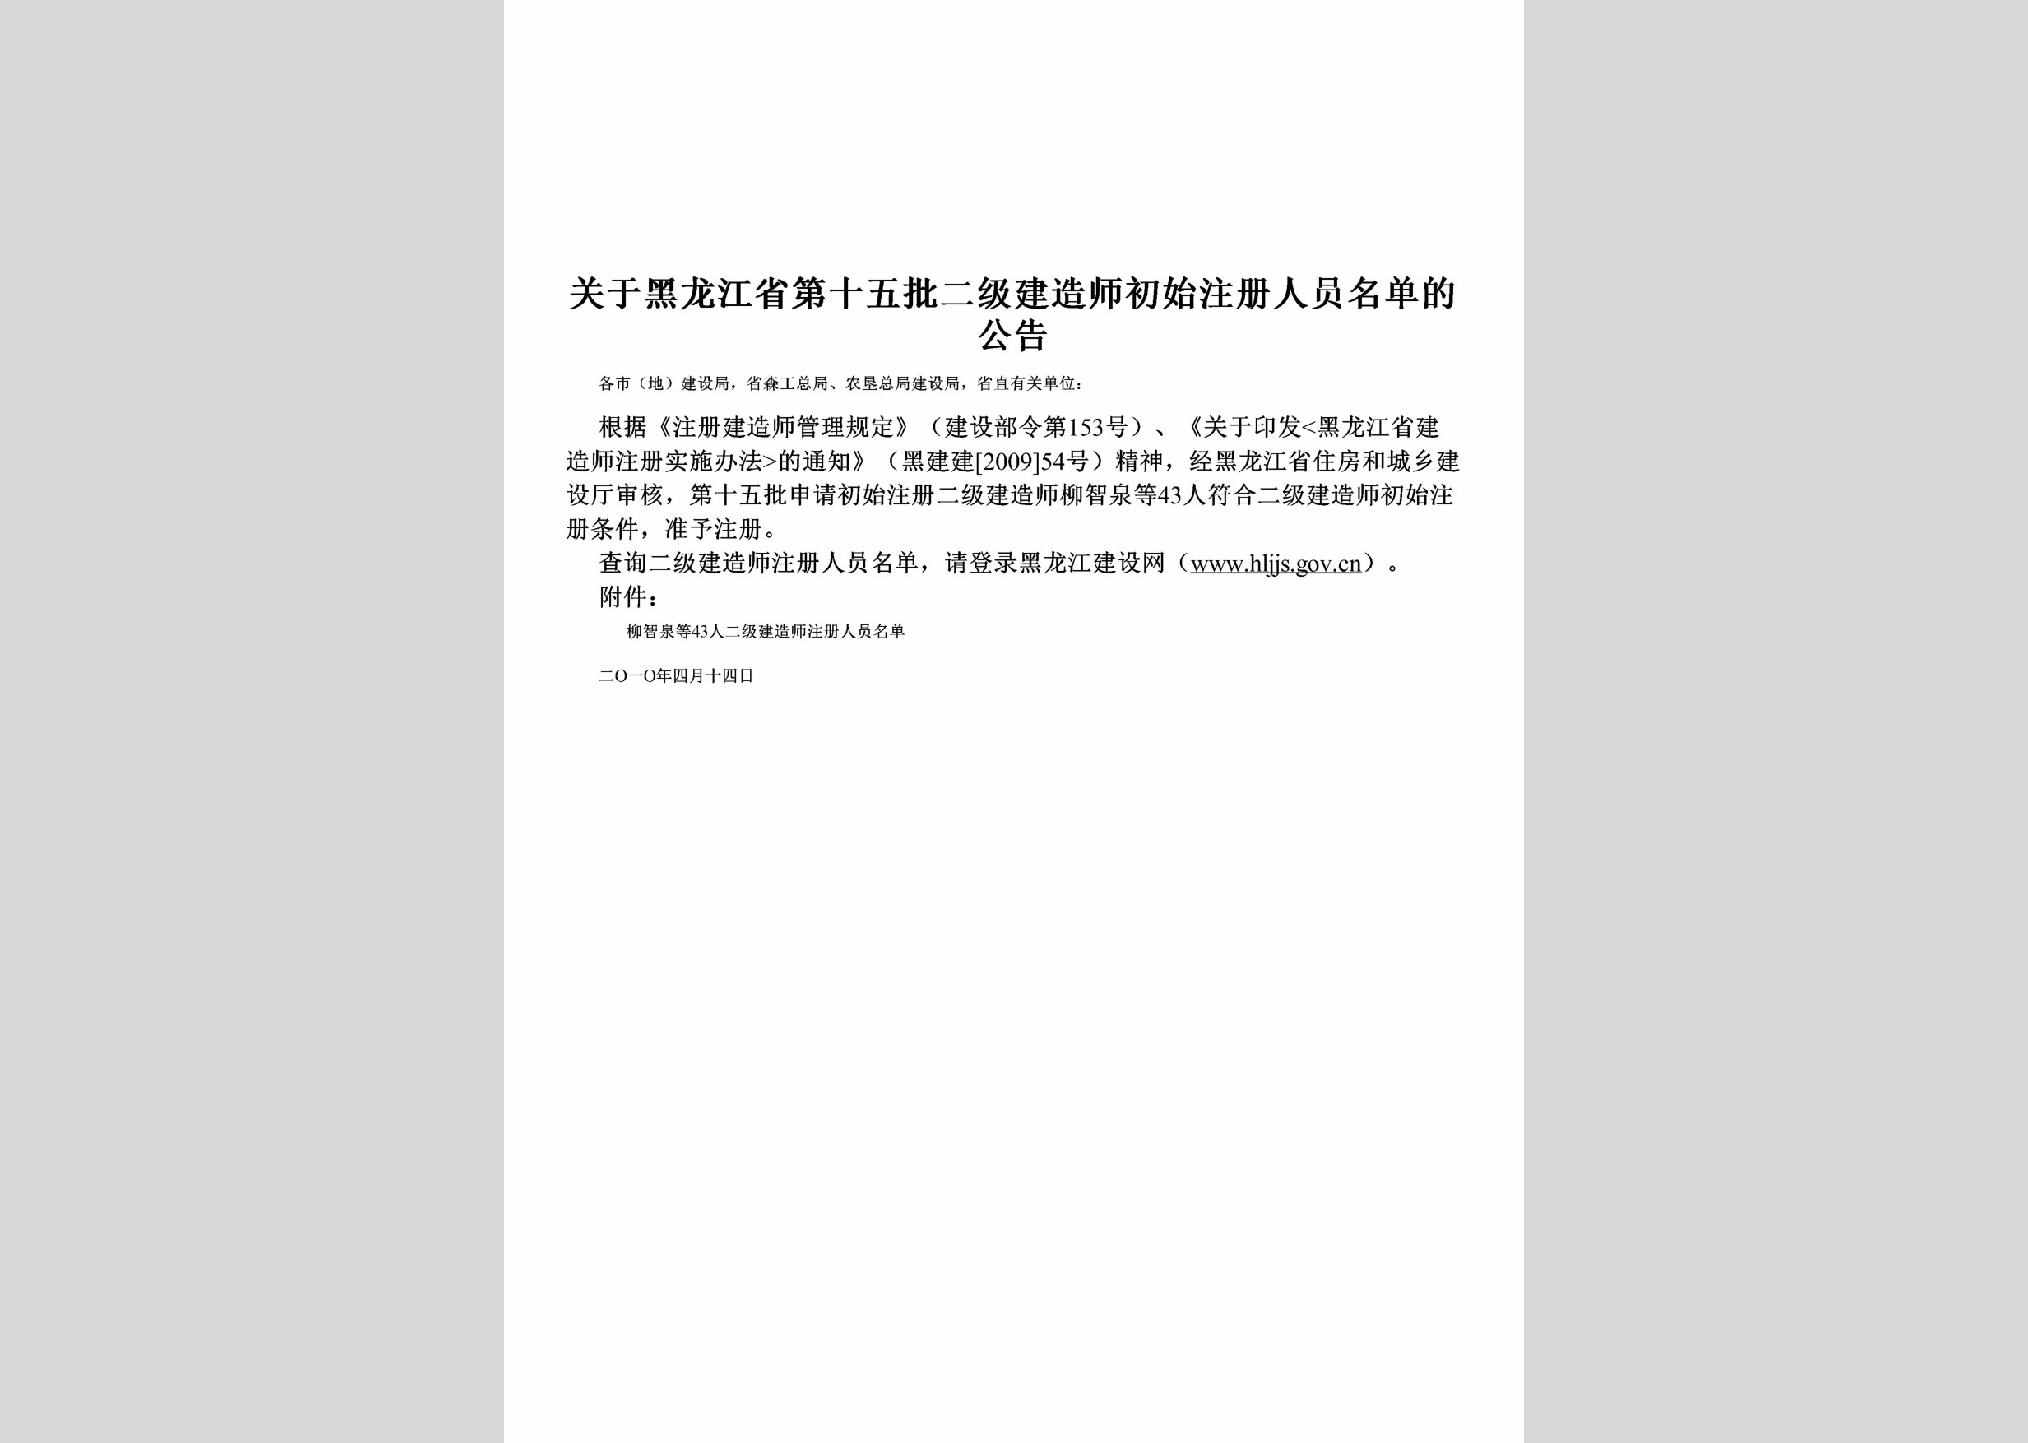 HLJ-SWPJZSGG-2010：关于黑龙江省第十五批二级建造师初始注册人员名单的公告